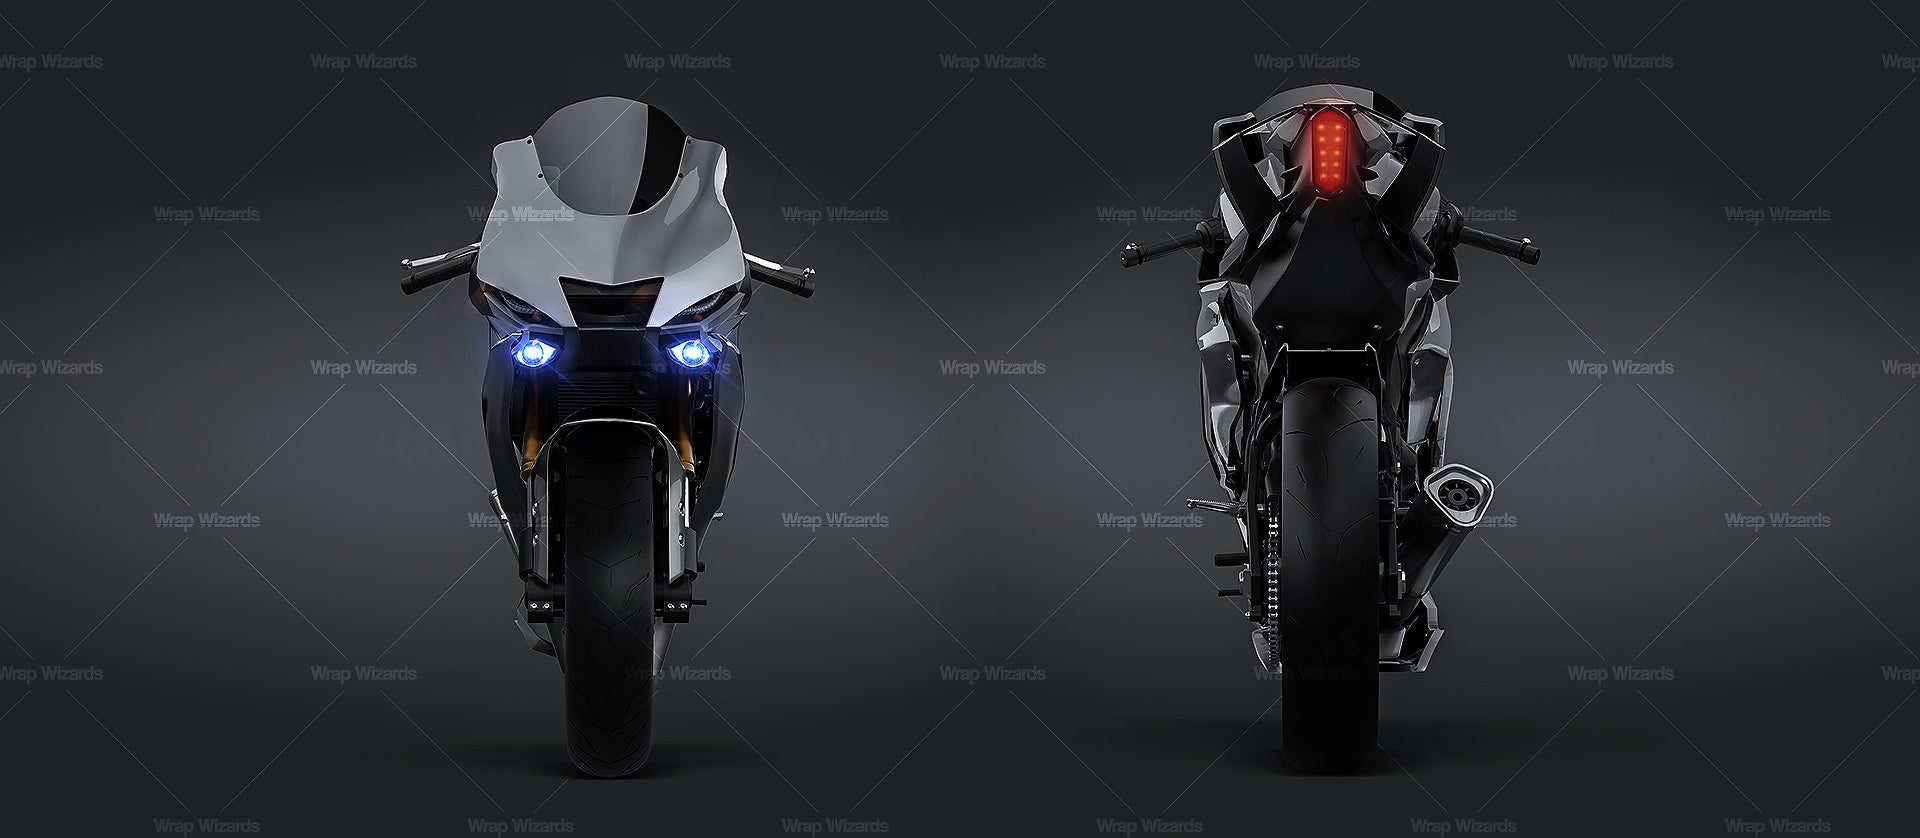 Yamaha YZF-R6 2018 - Motorcycle Mockup